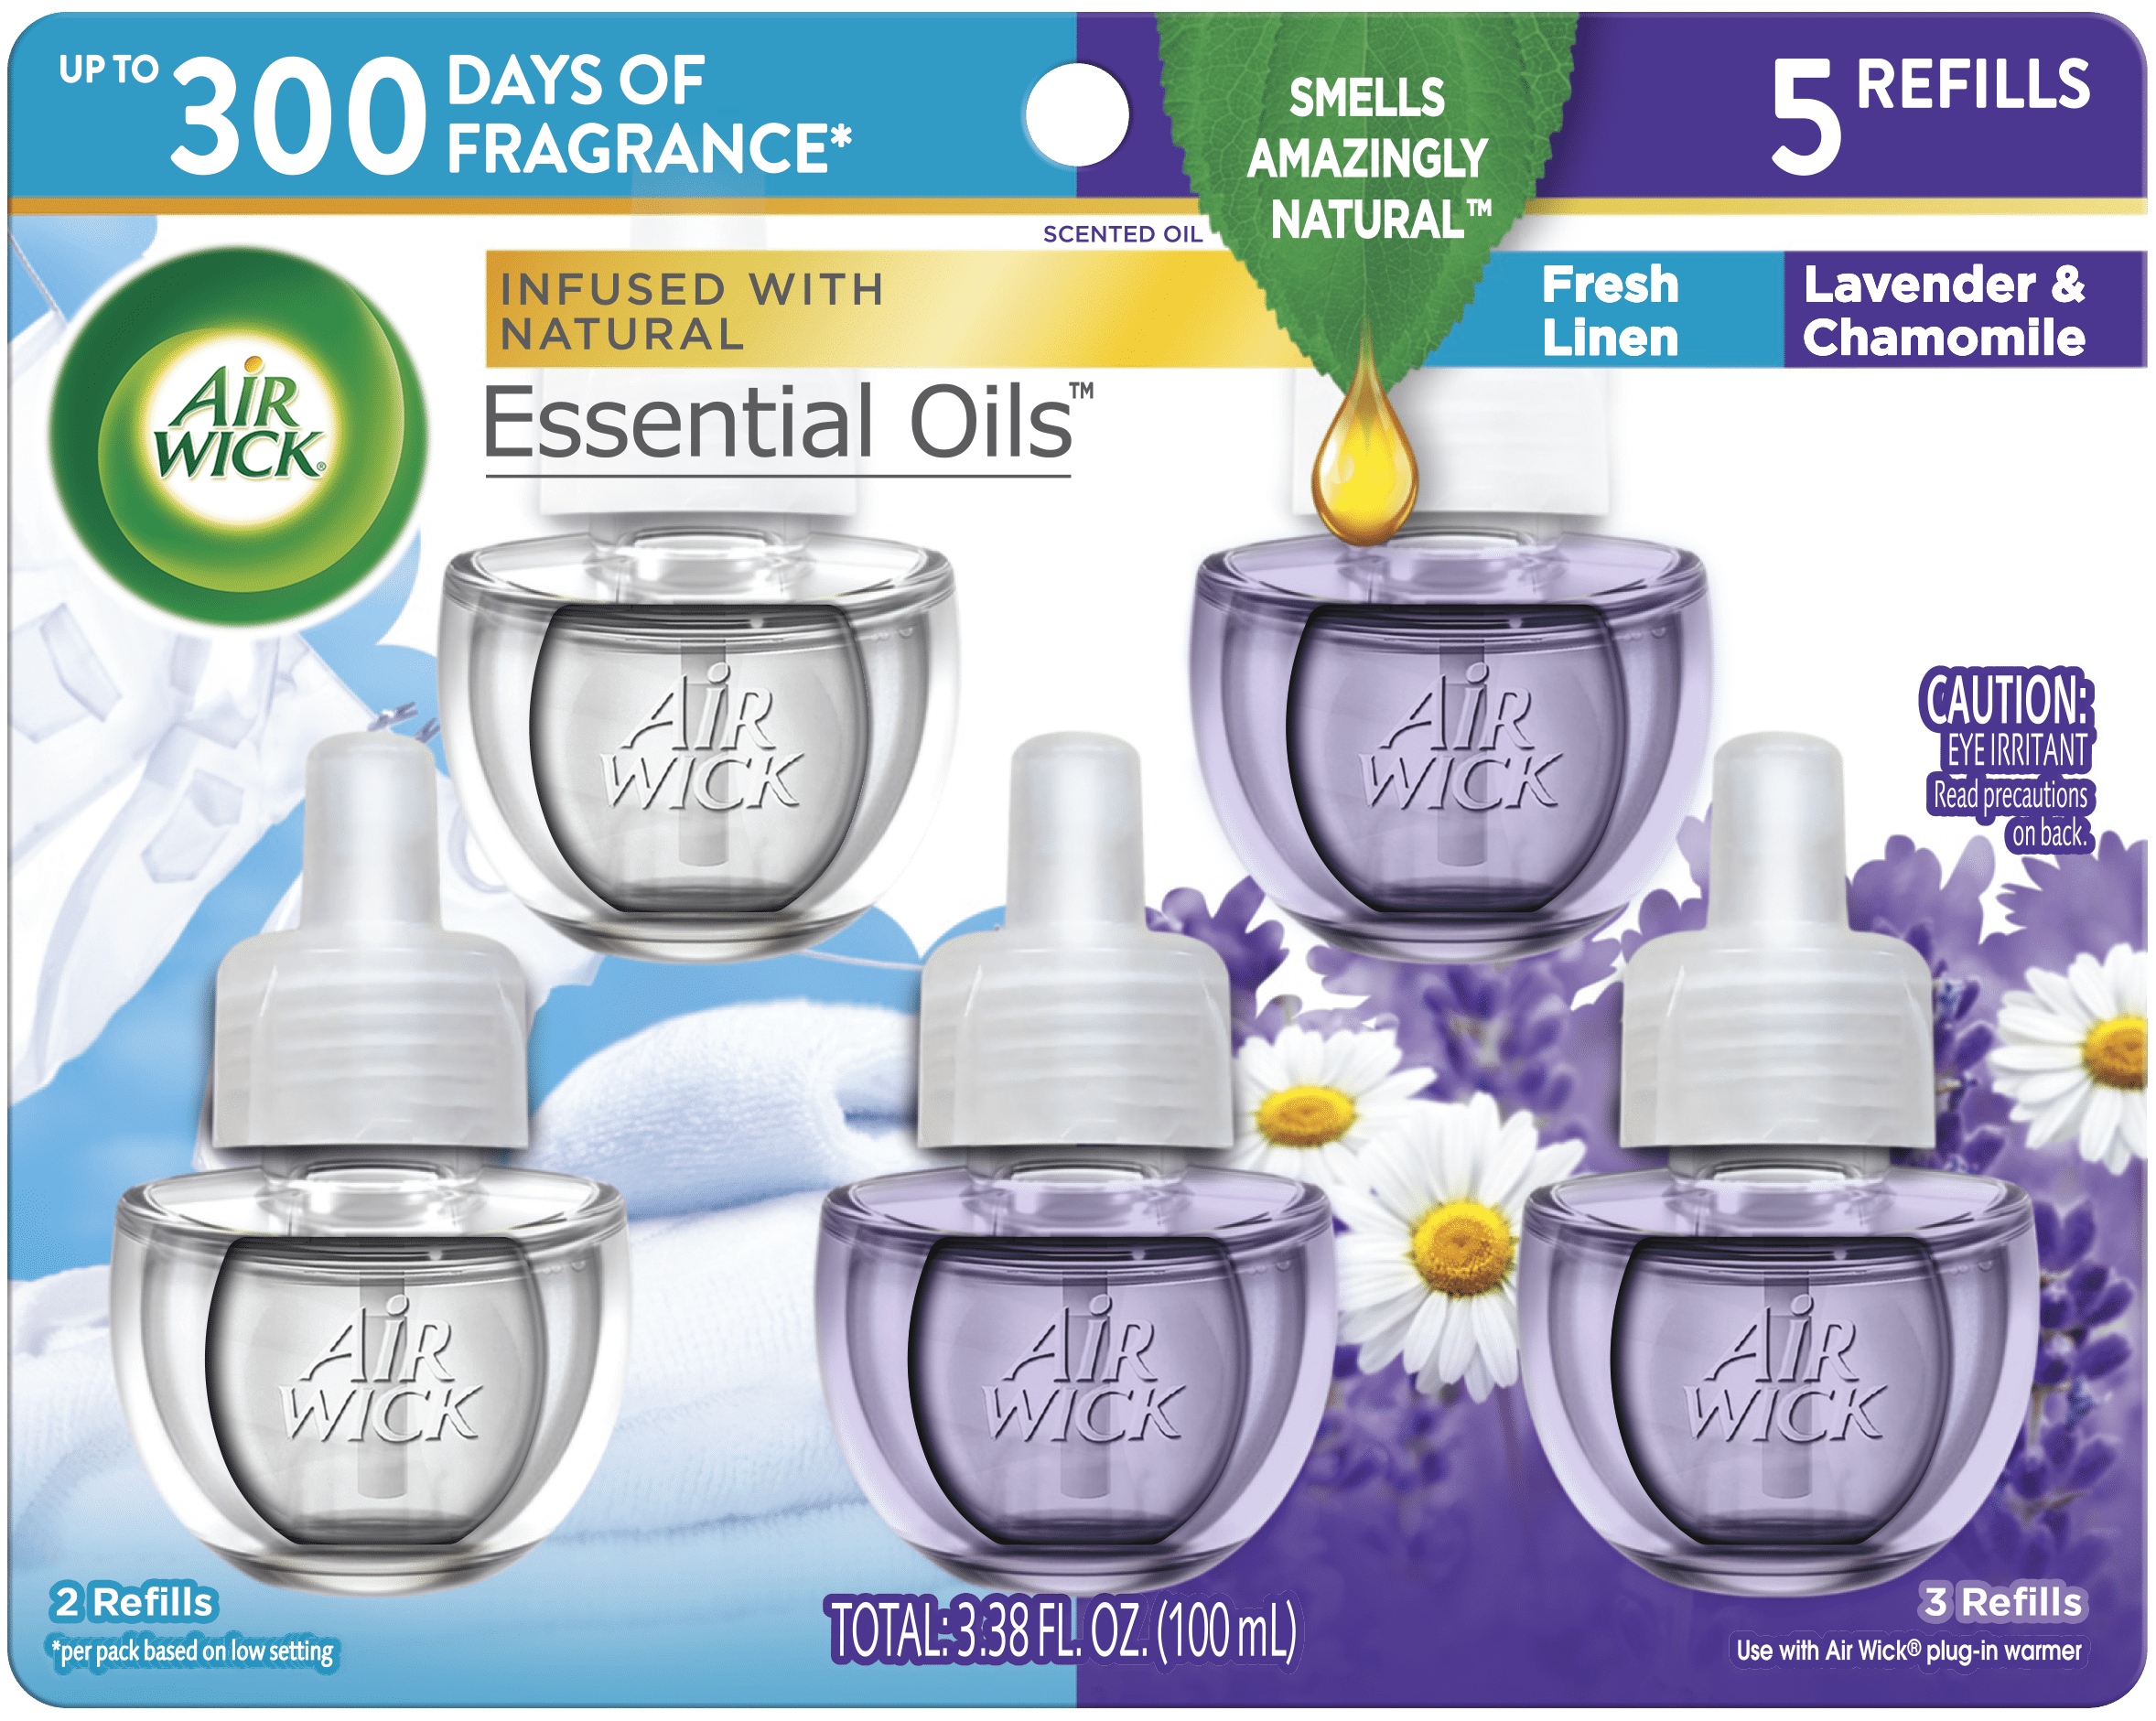 Air Wick Essential Oils Scented Oil Refills, Fresh Linen/Lavender & Chamomile - 5 pack, 0.67 fl oz refills